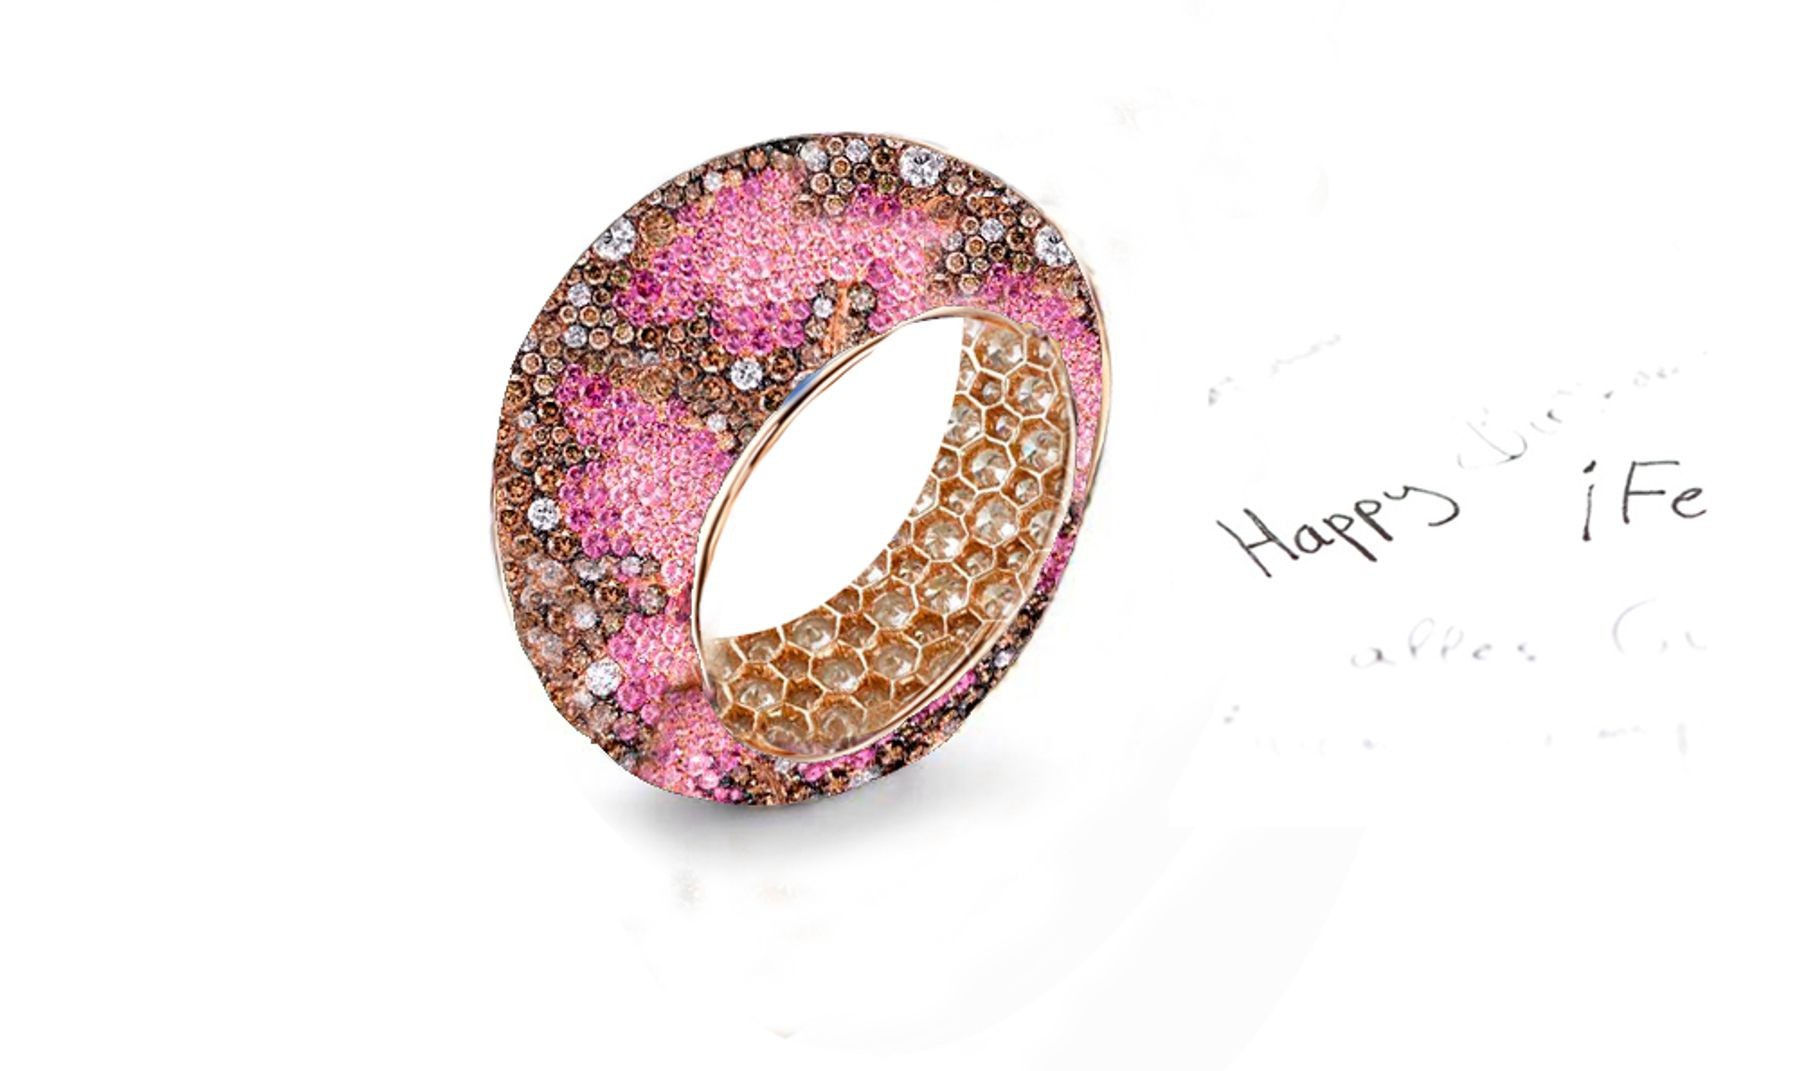 For Weddings or Anniversaries - Eternity Rings Featuring Diamonds & Rubies, Emeralds & Sapphires